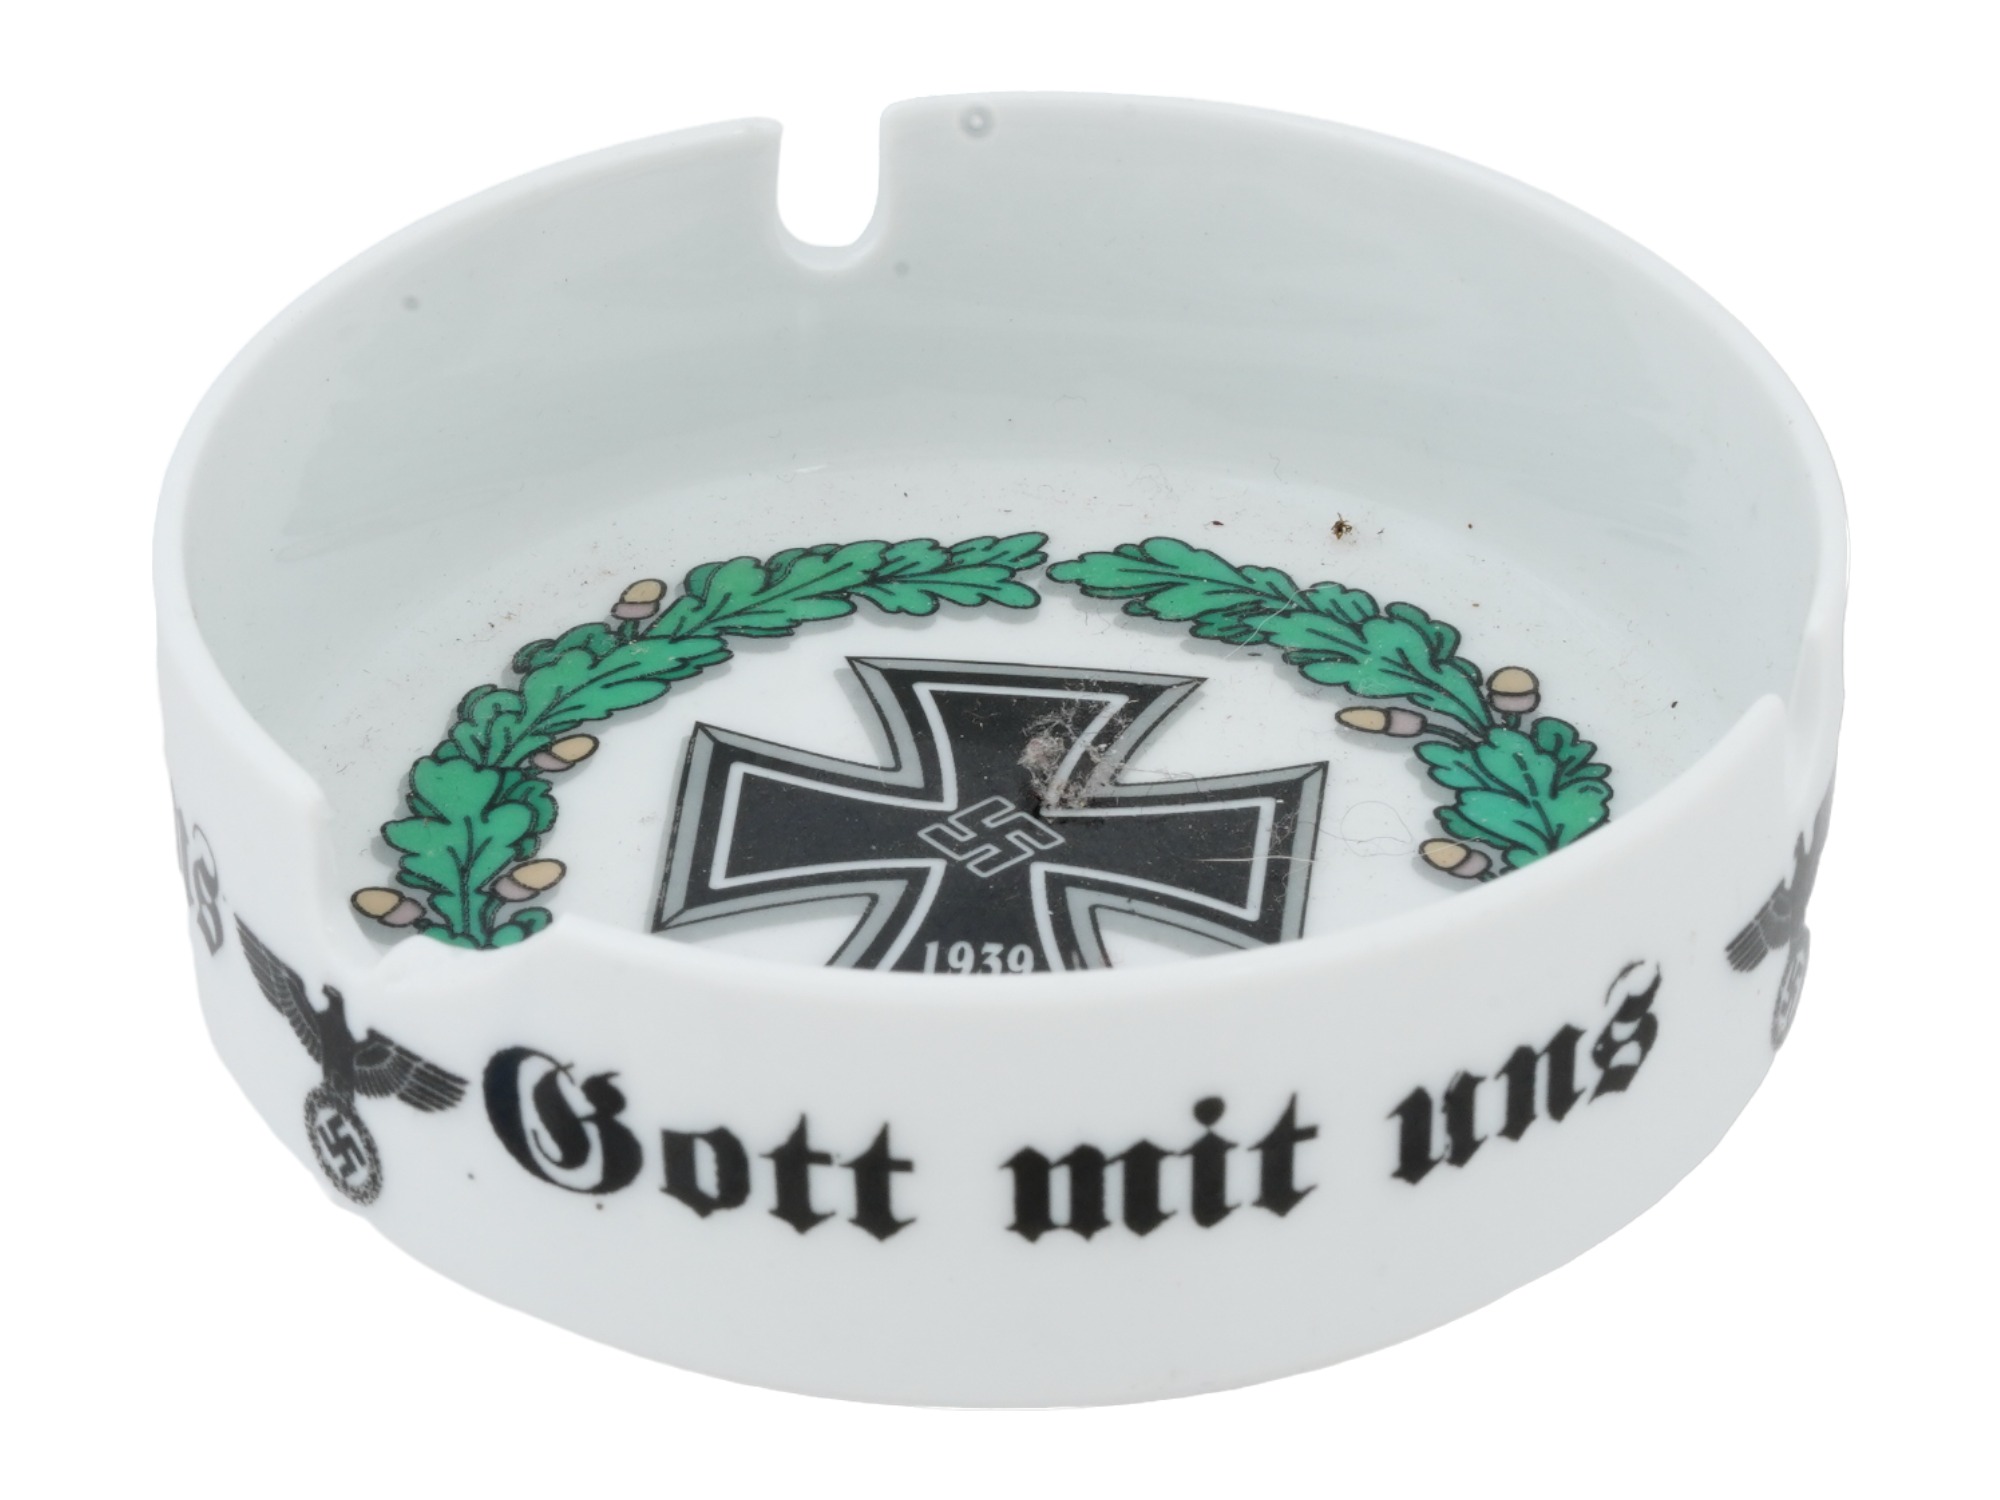 GERMAN WWII NSDAP ASHTRAY PIC-1